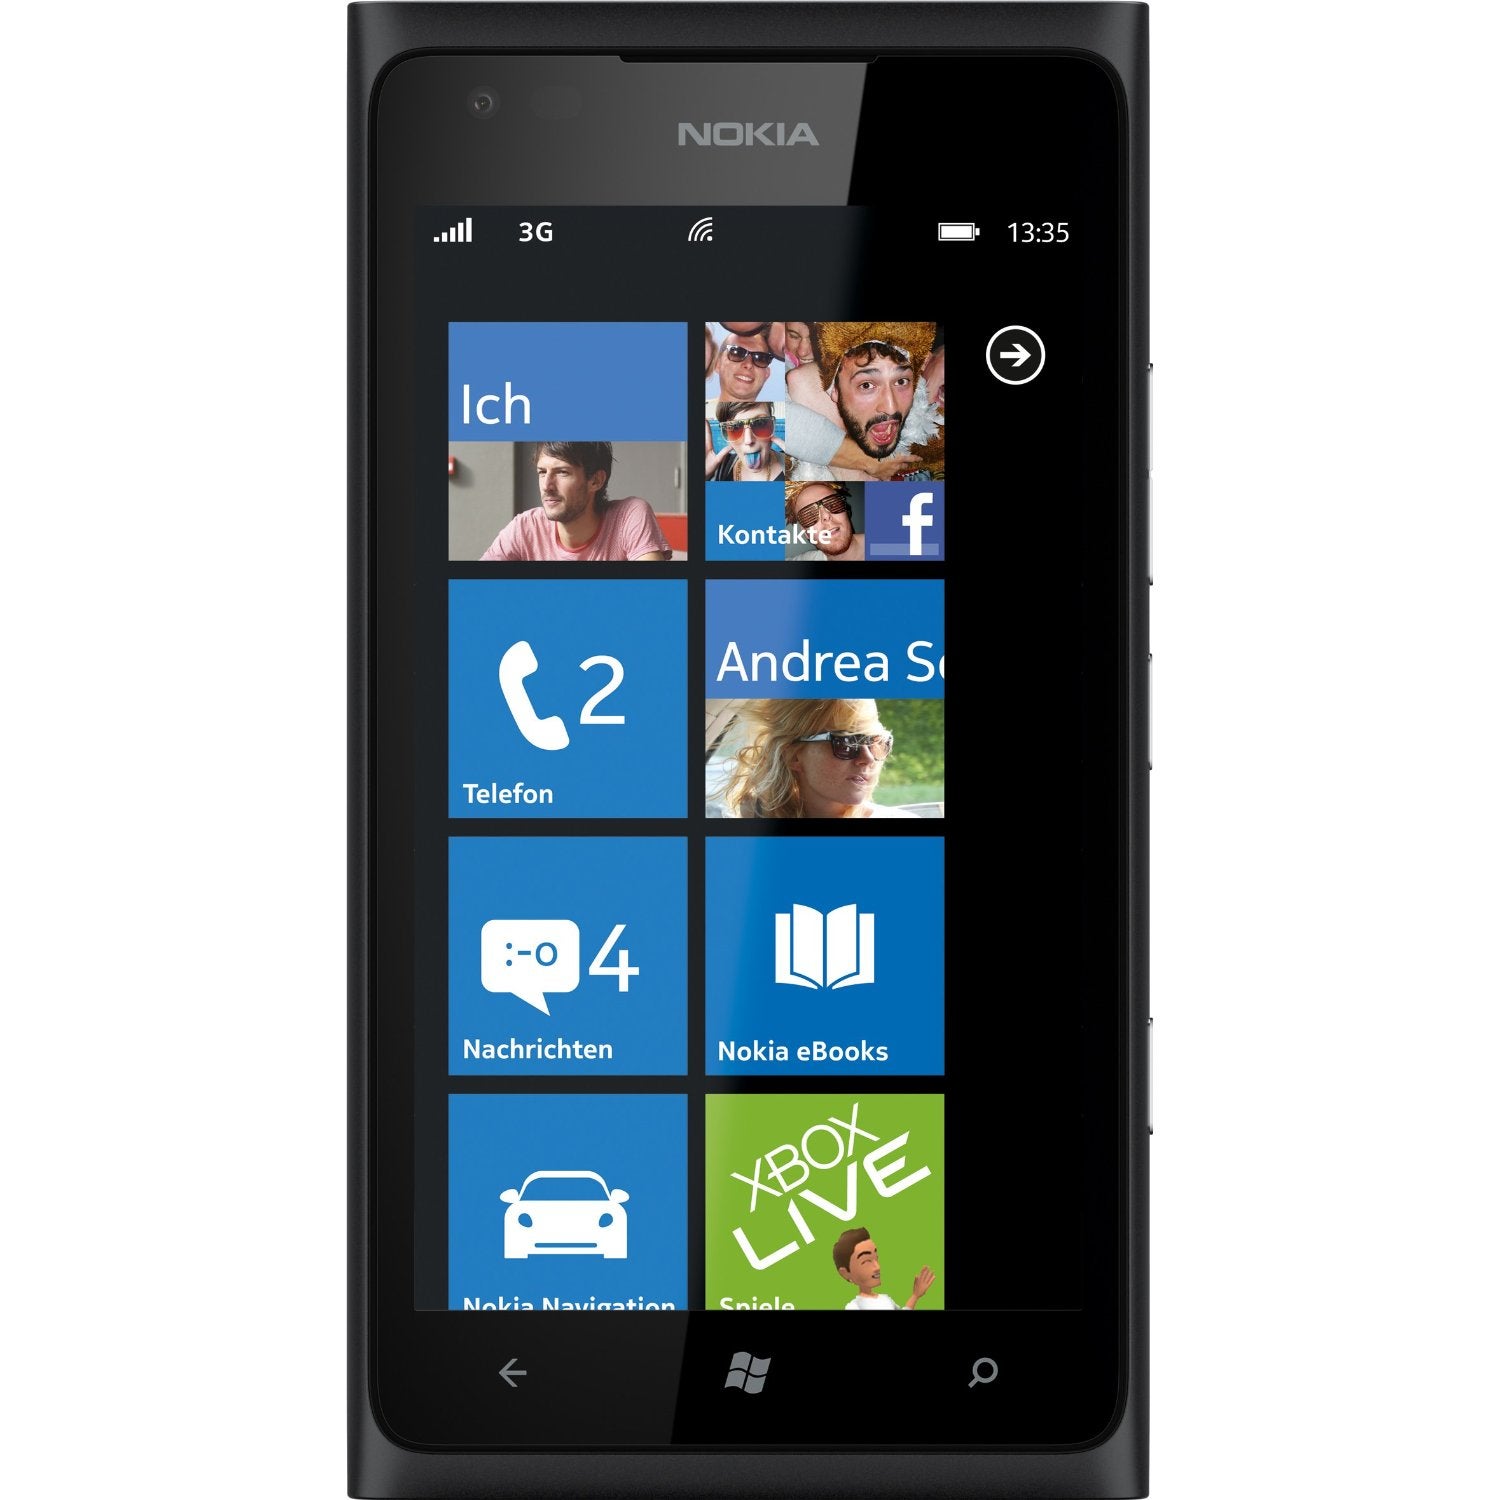 Nokia Lumia 900 finally makes its German debut